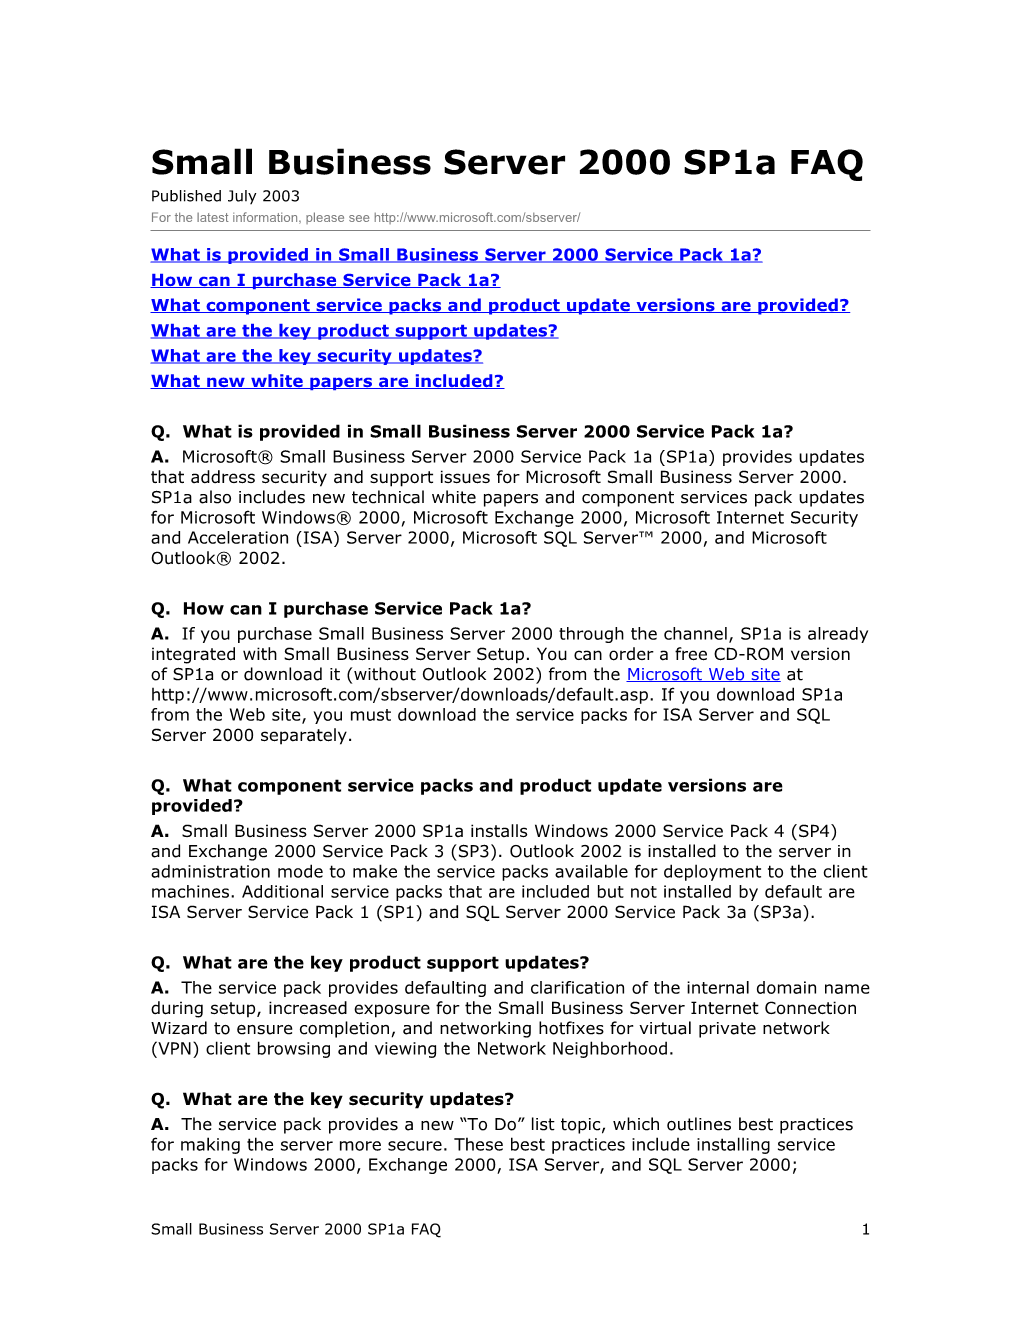 Small Business Server 2000 Sp1a FAQ